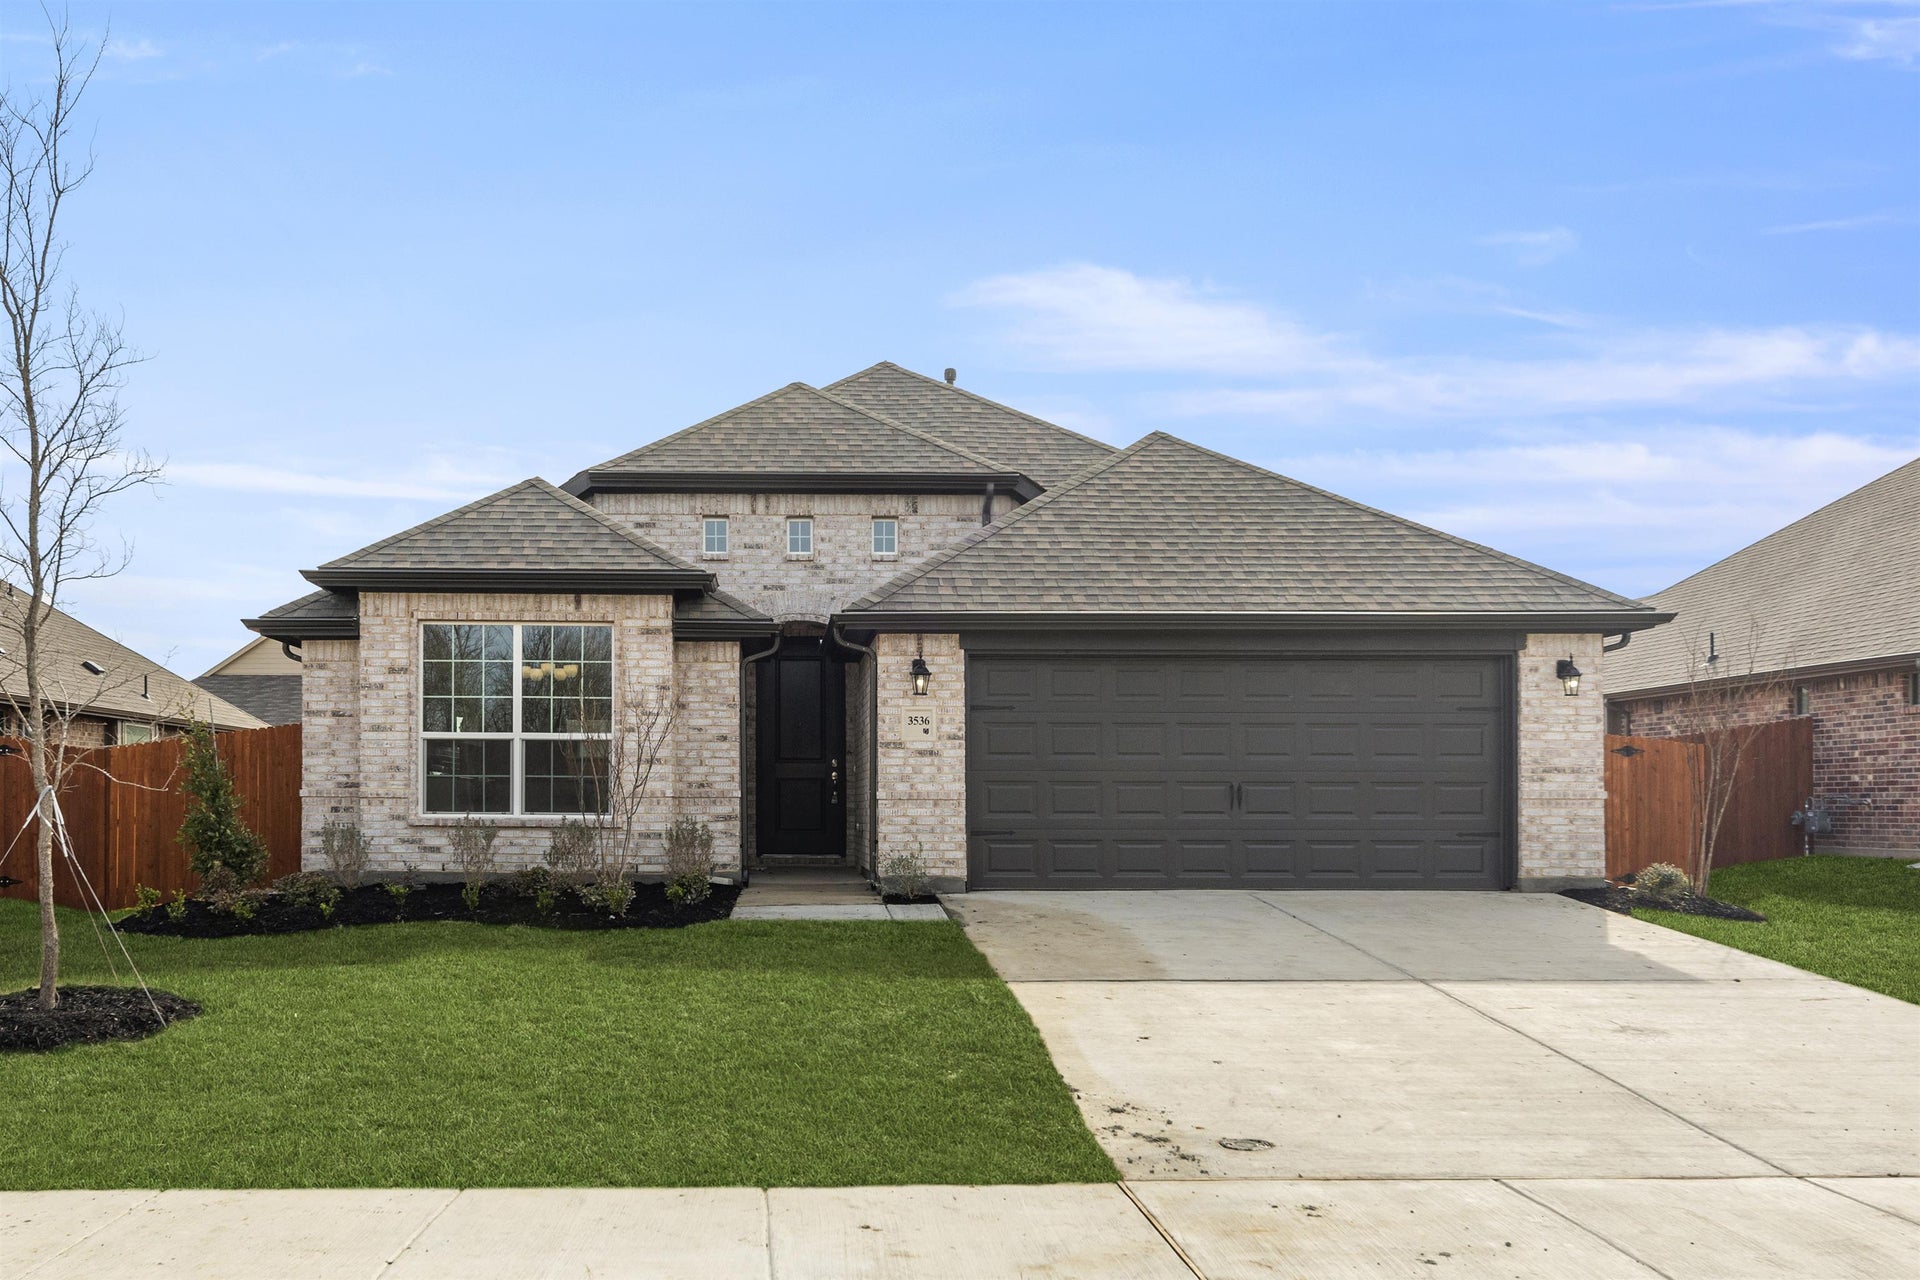 1,658sf New Home in Heartland, TX